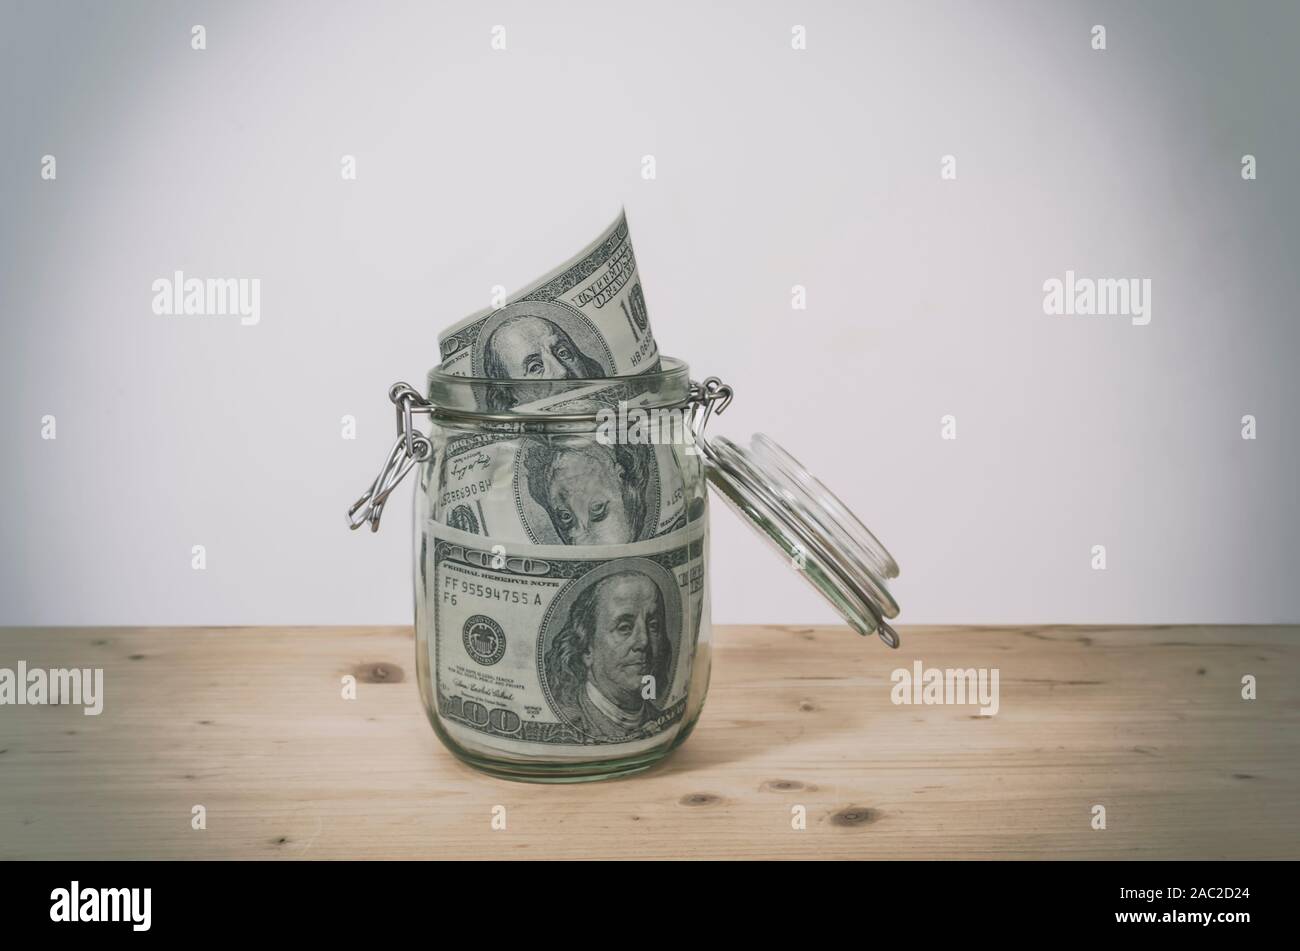 Dollar bills in glass jar on wooden table. Saving money concept. Stock Photo